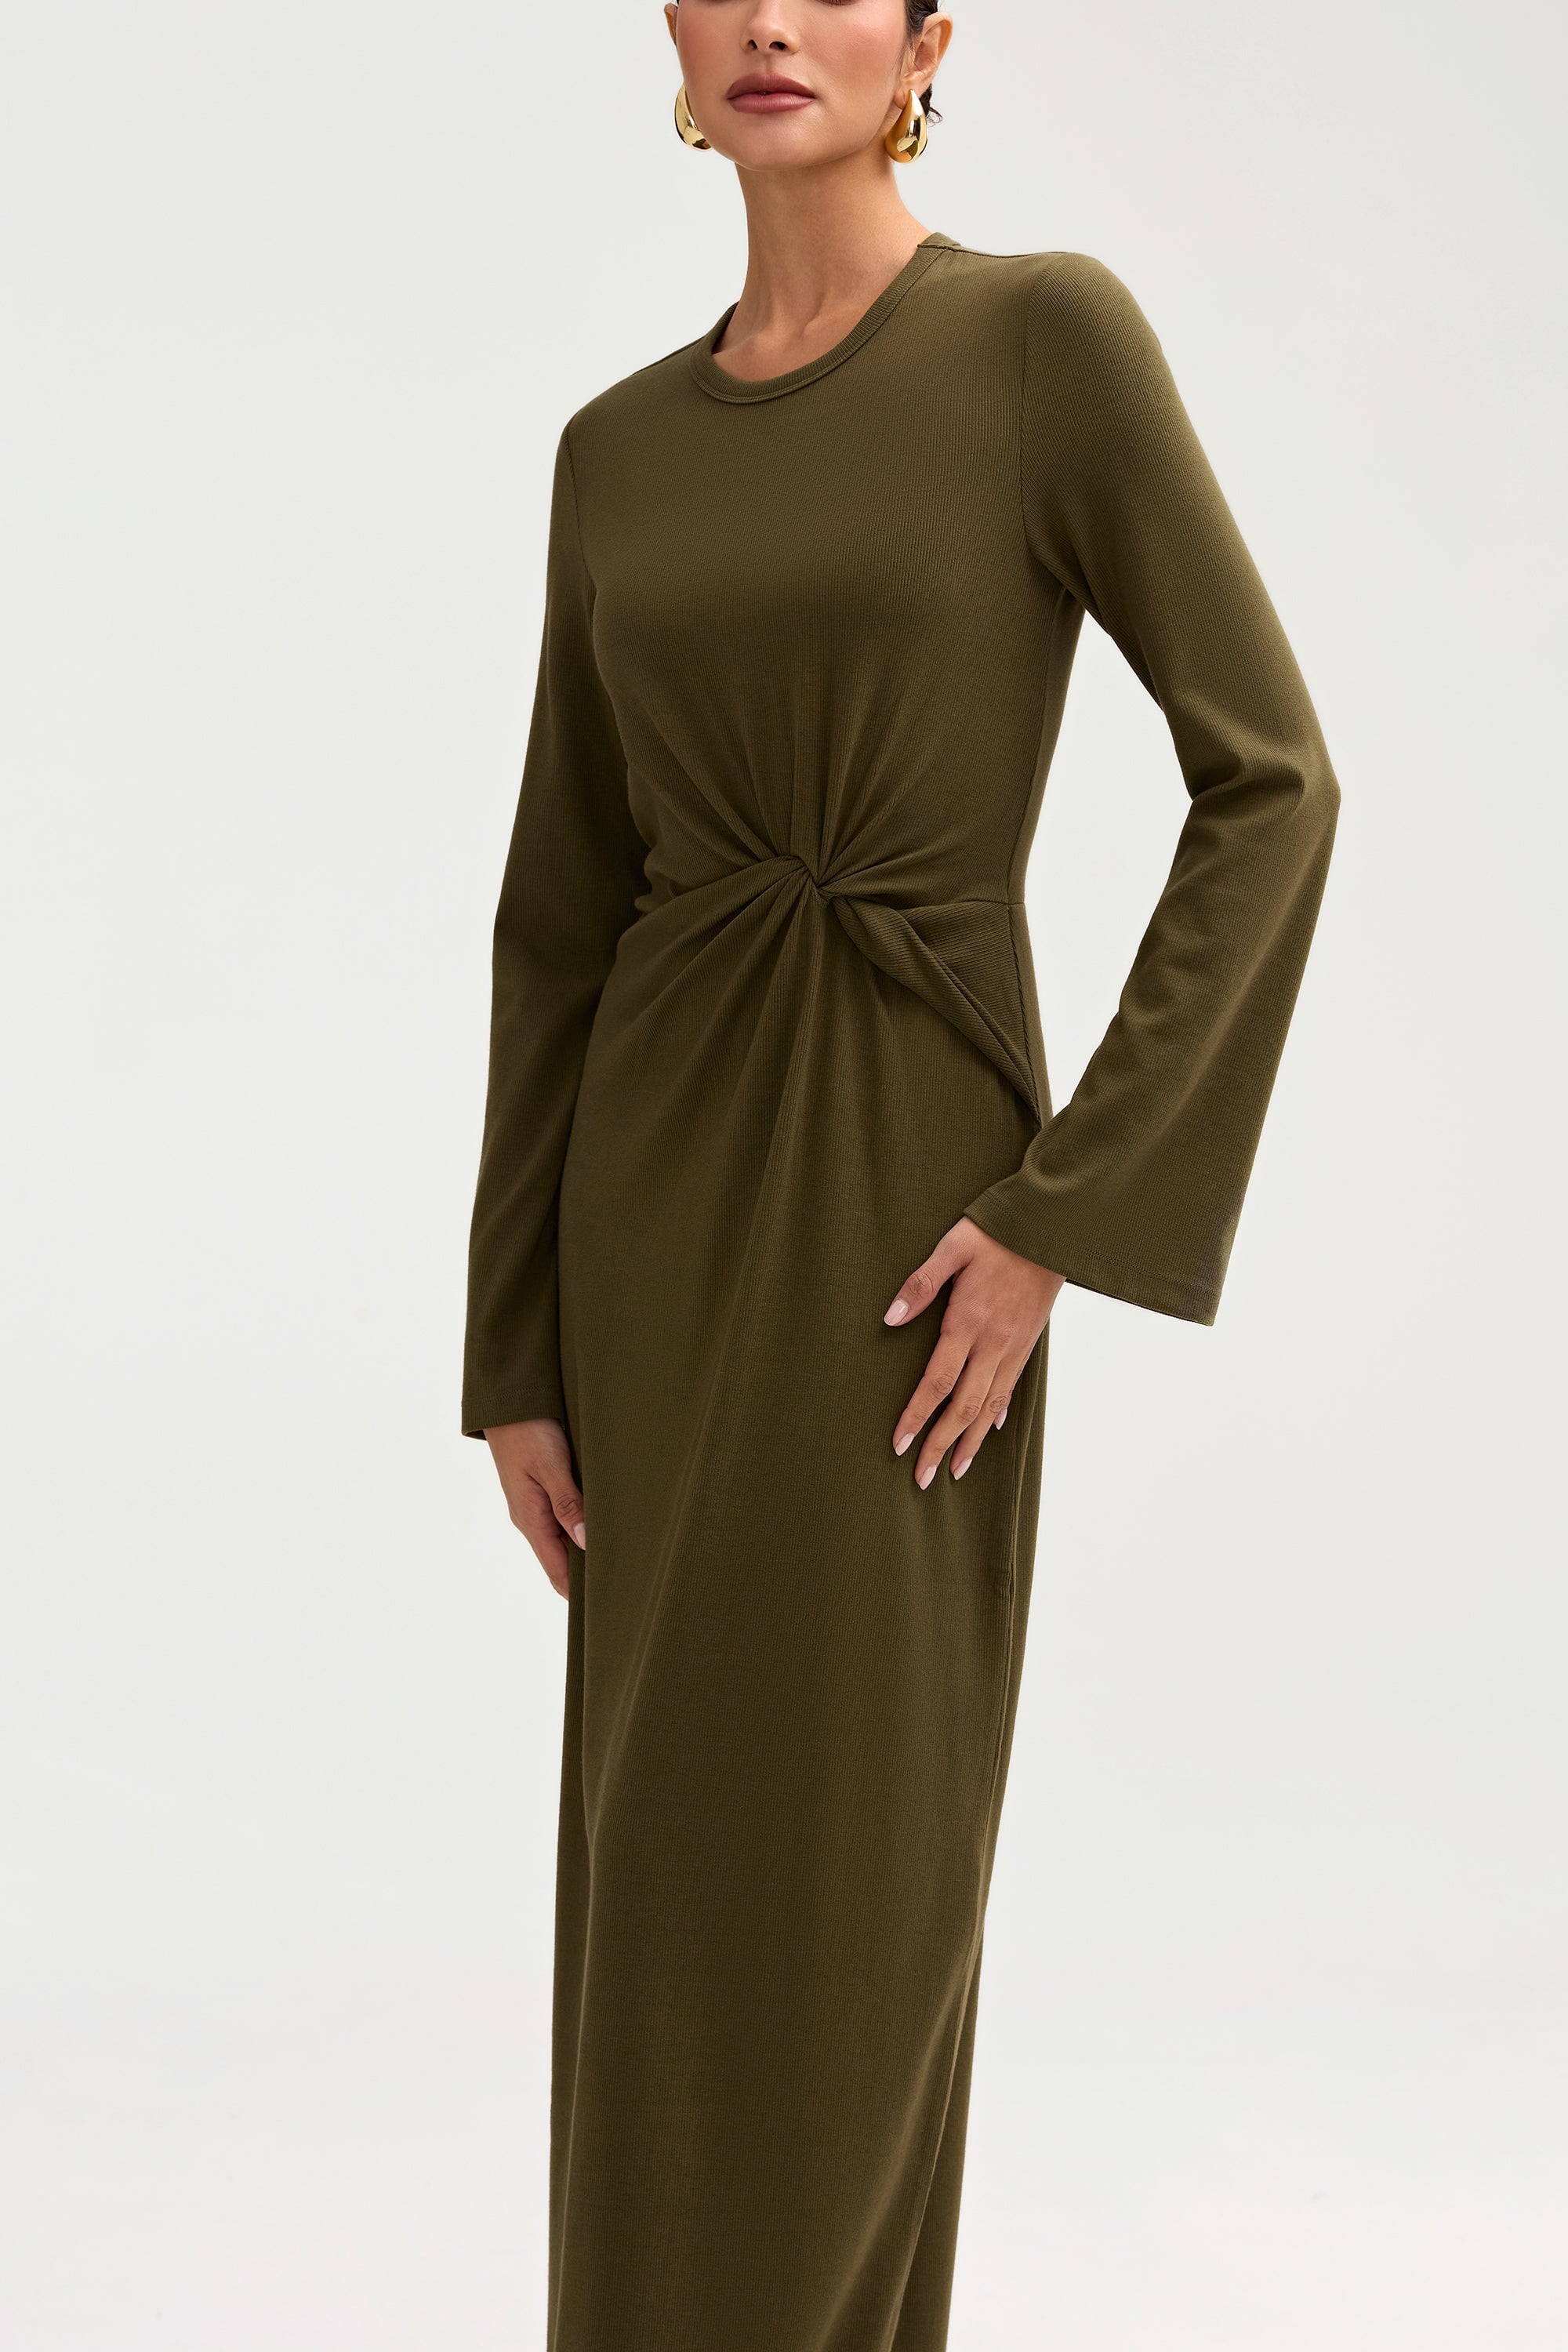 Aissia Ribbed Twist Front Maxi Dress - Olive Night Clothing saigonodysseyhotel 